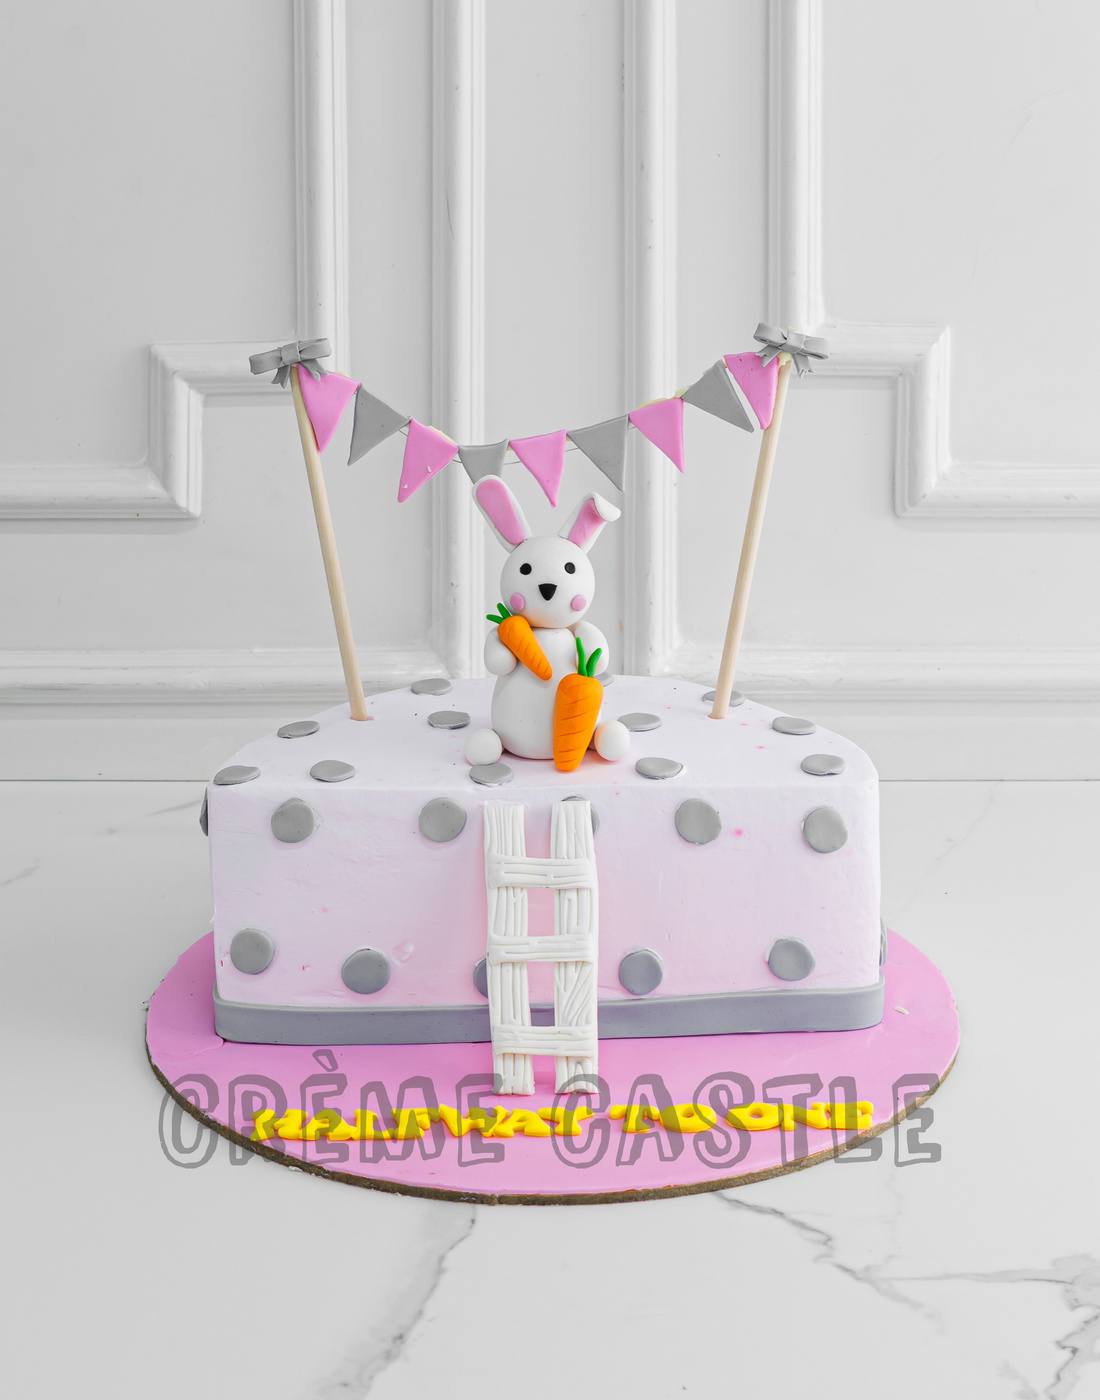 6 months of perfection🎉 Happy Birthday 6 months cake ❤️ Order now #cake  #cakedecorating #cakes #birthdaycake #chocolate #food #... | Instagram